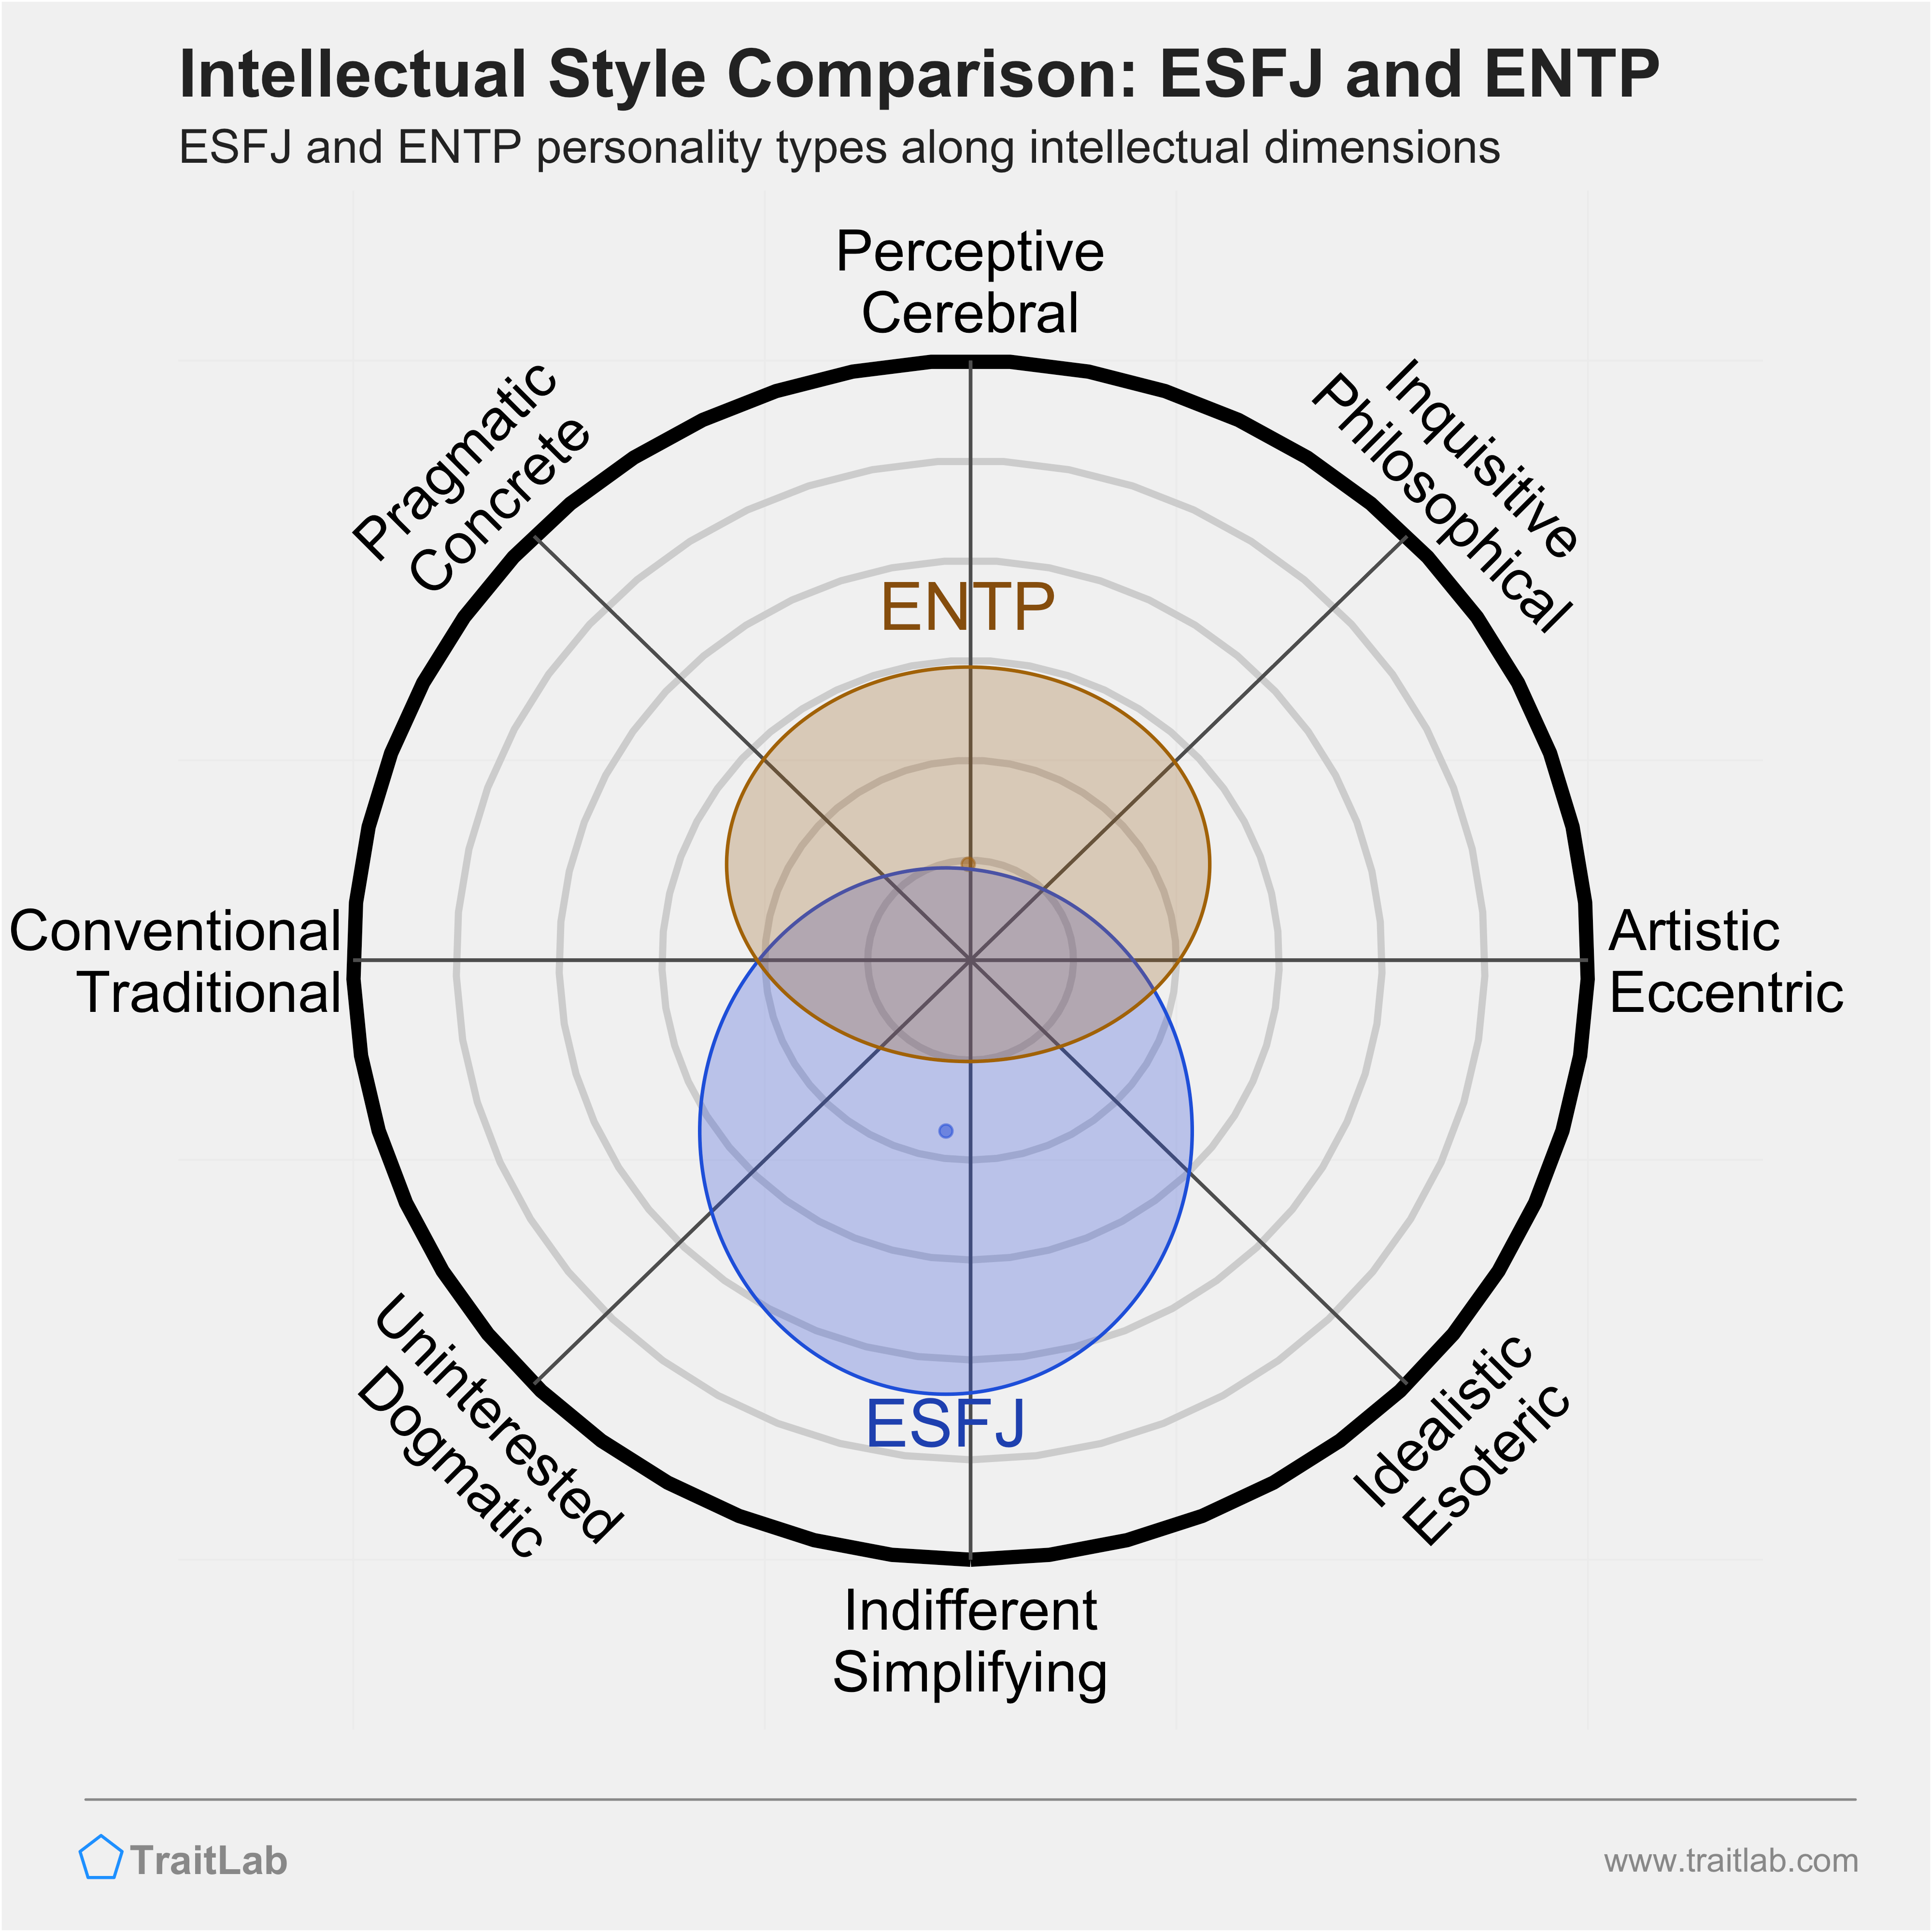 ESFJ and ENTP comparison across intellectual dimensions